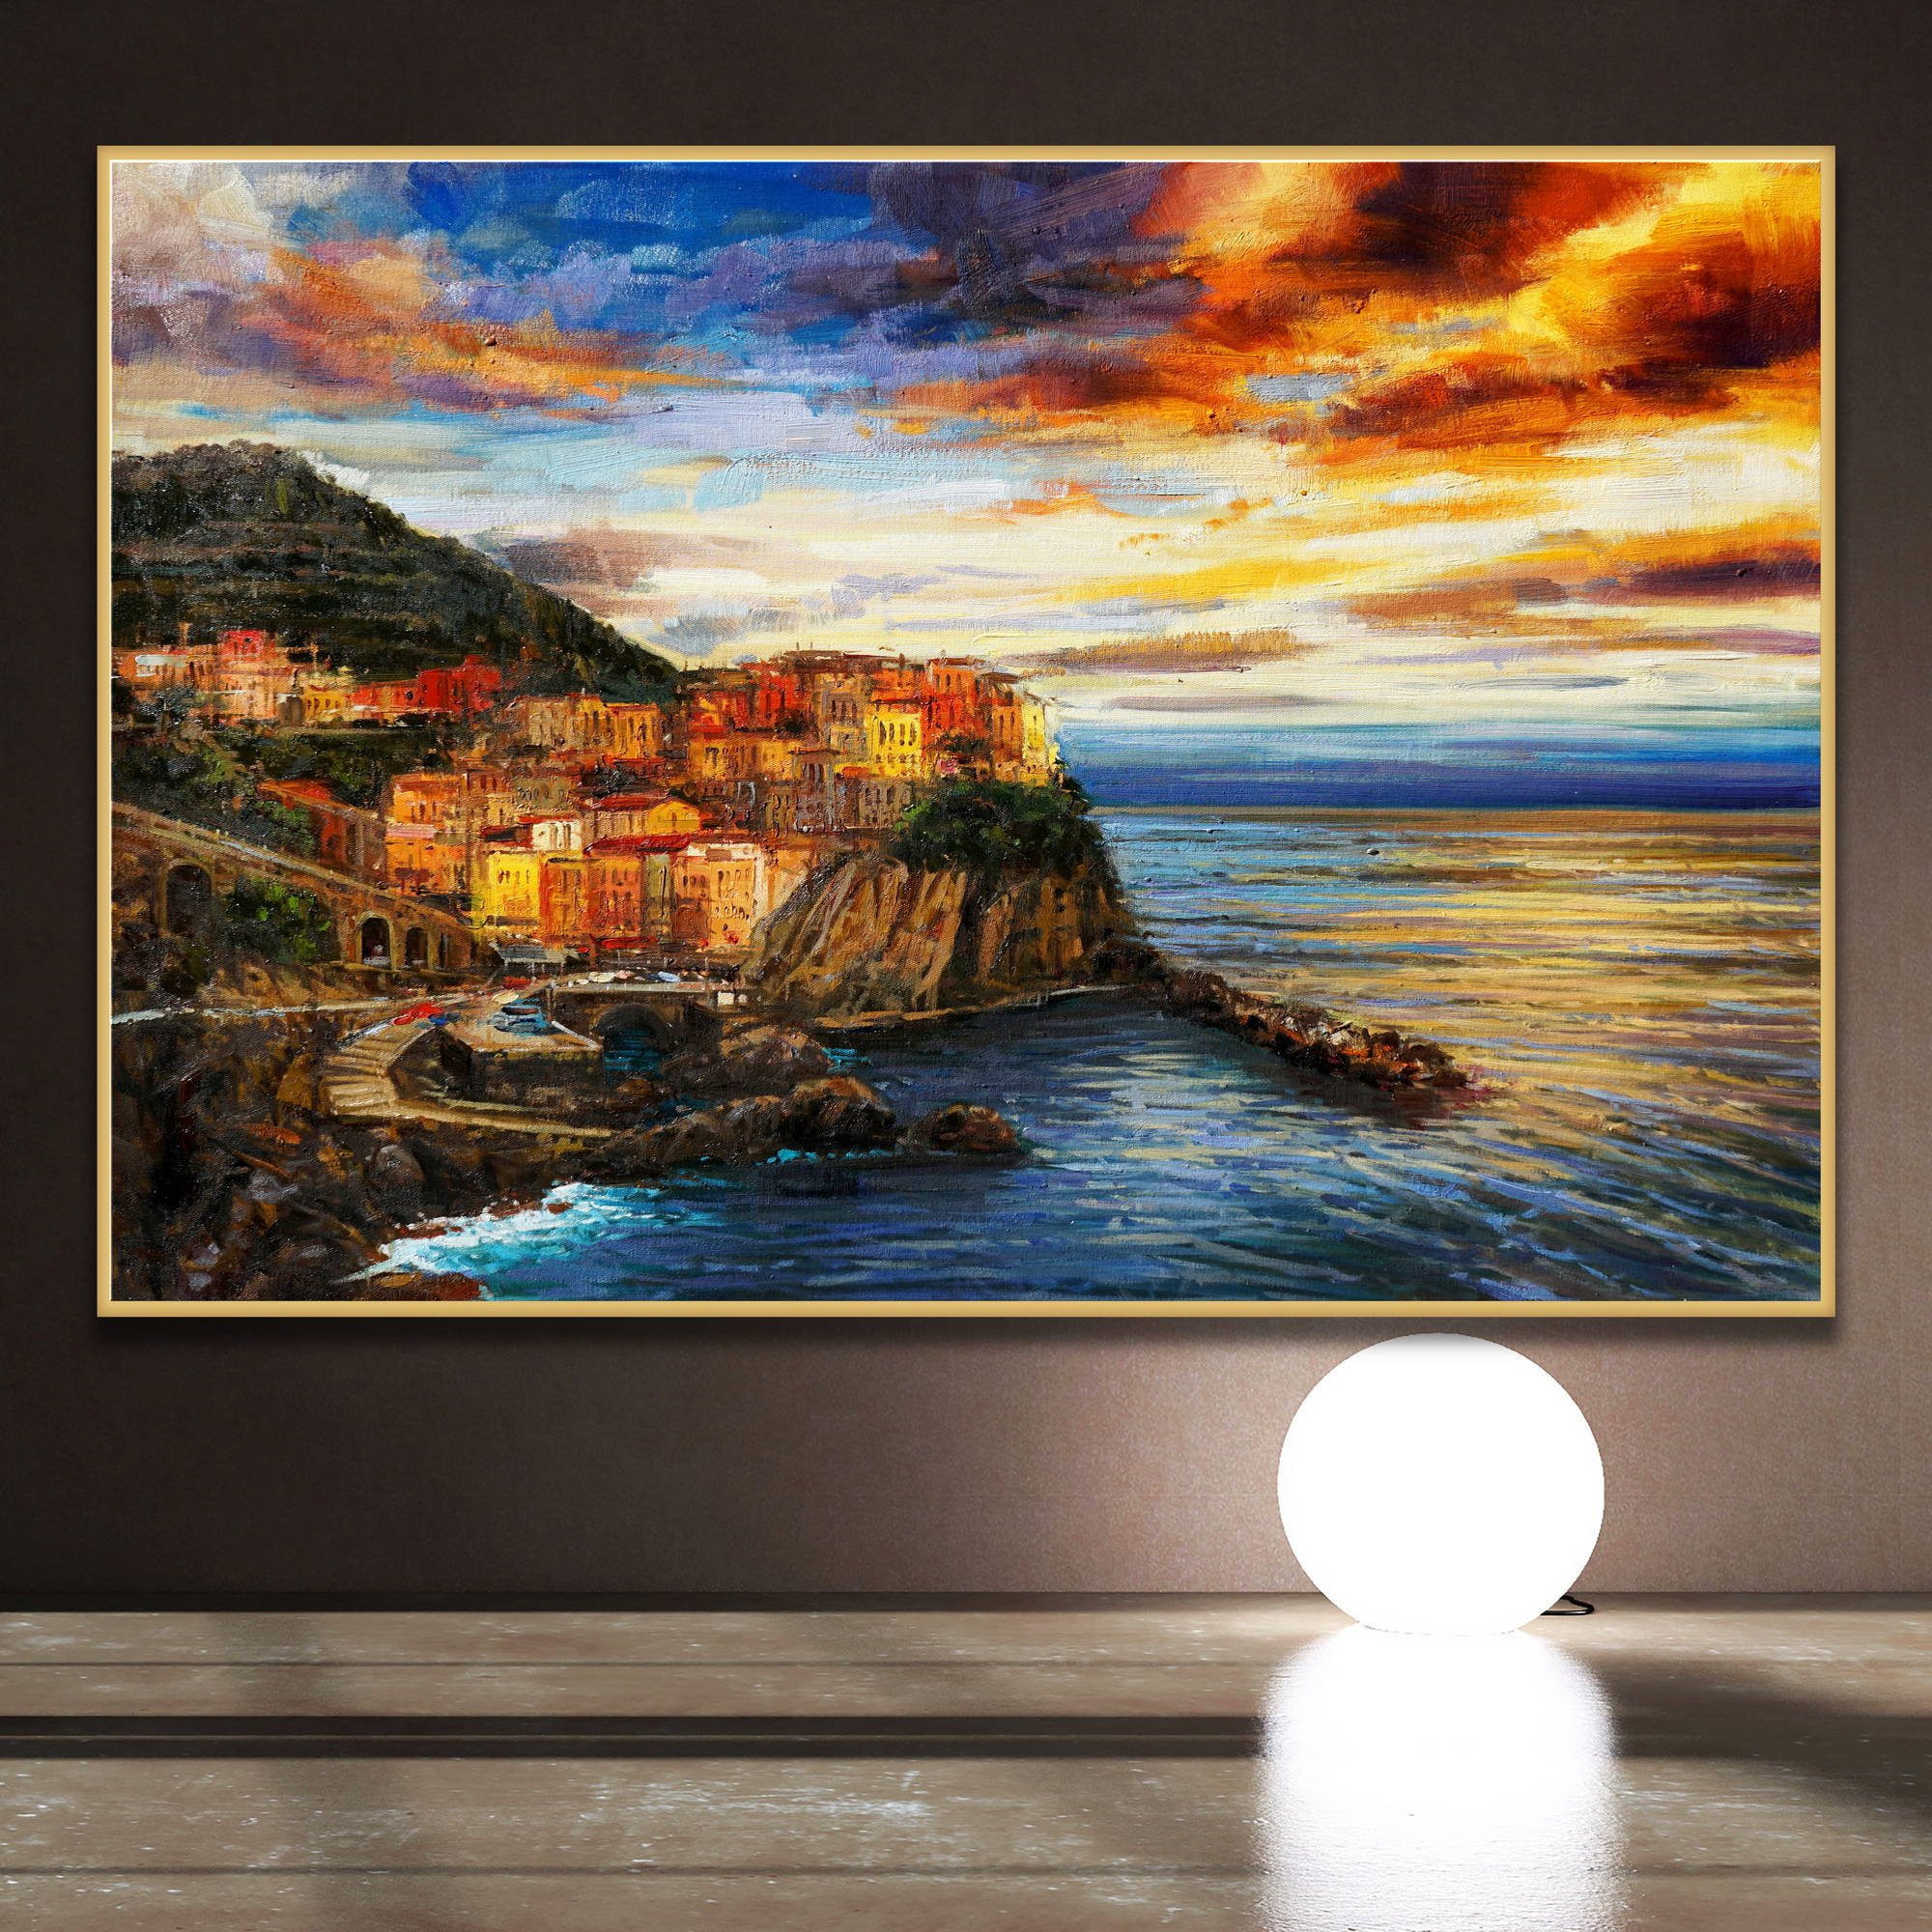 Dipinto di una cittadina costiera mediterranea al tramonto